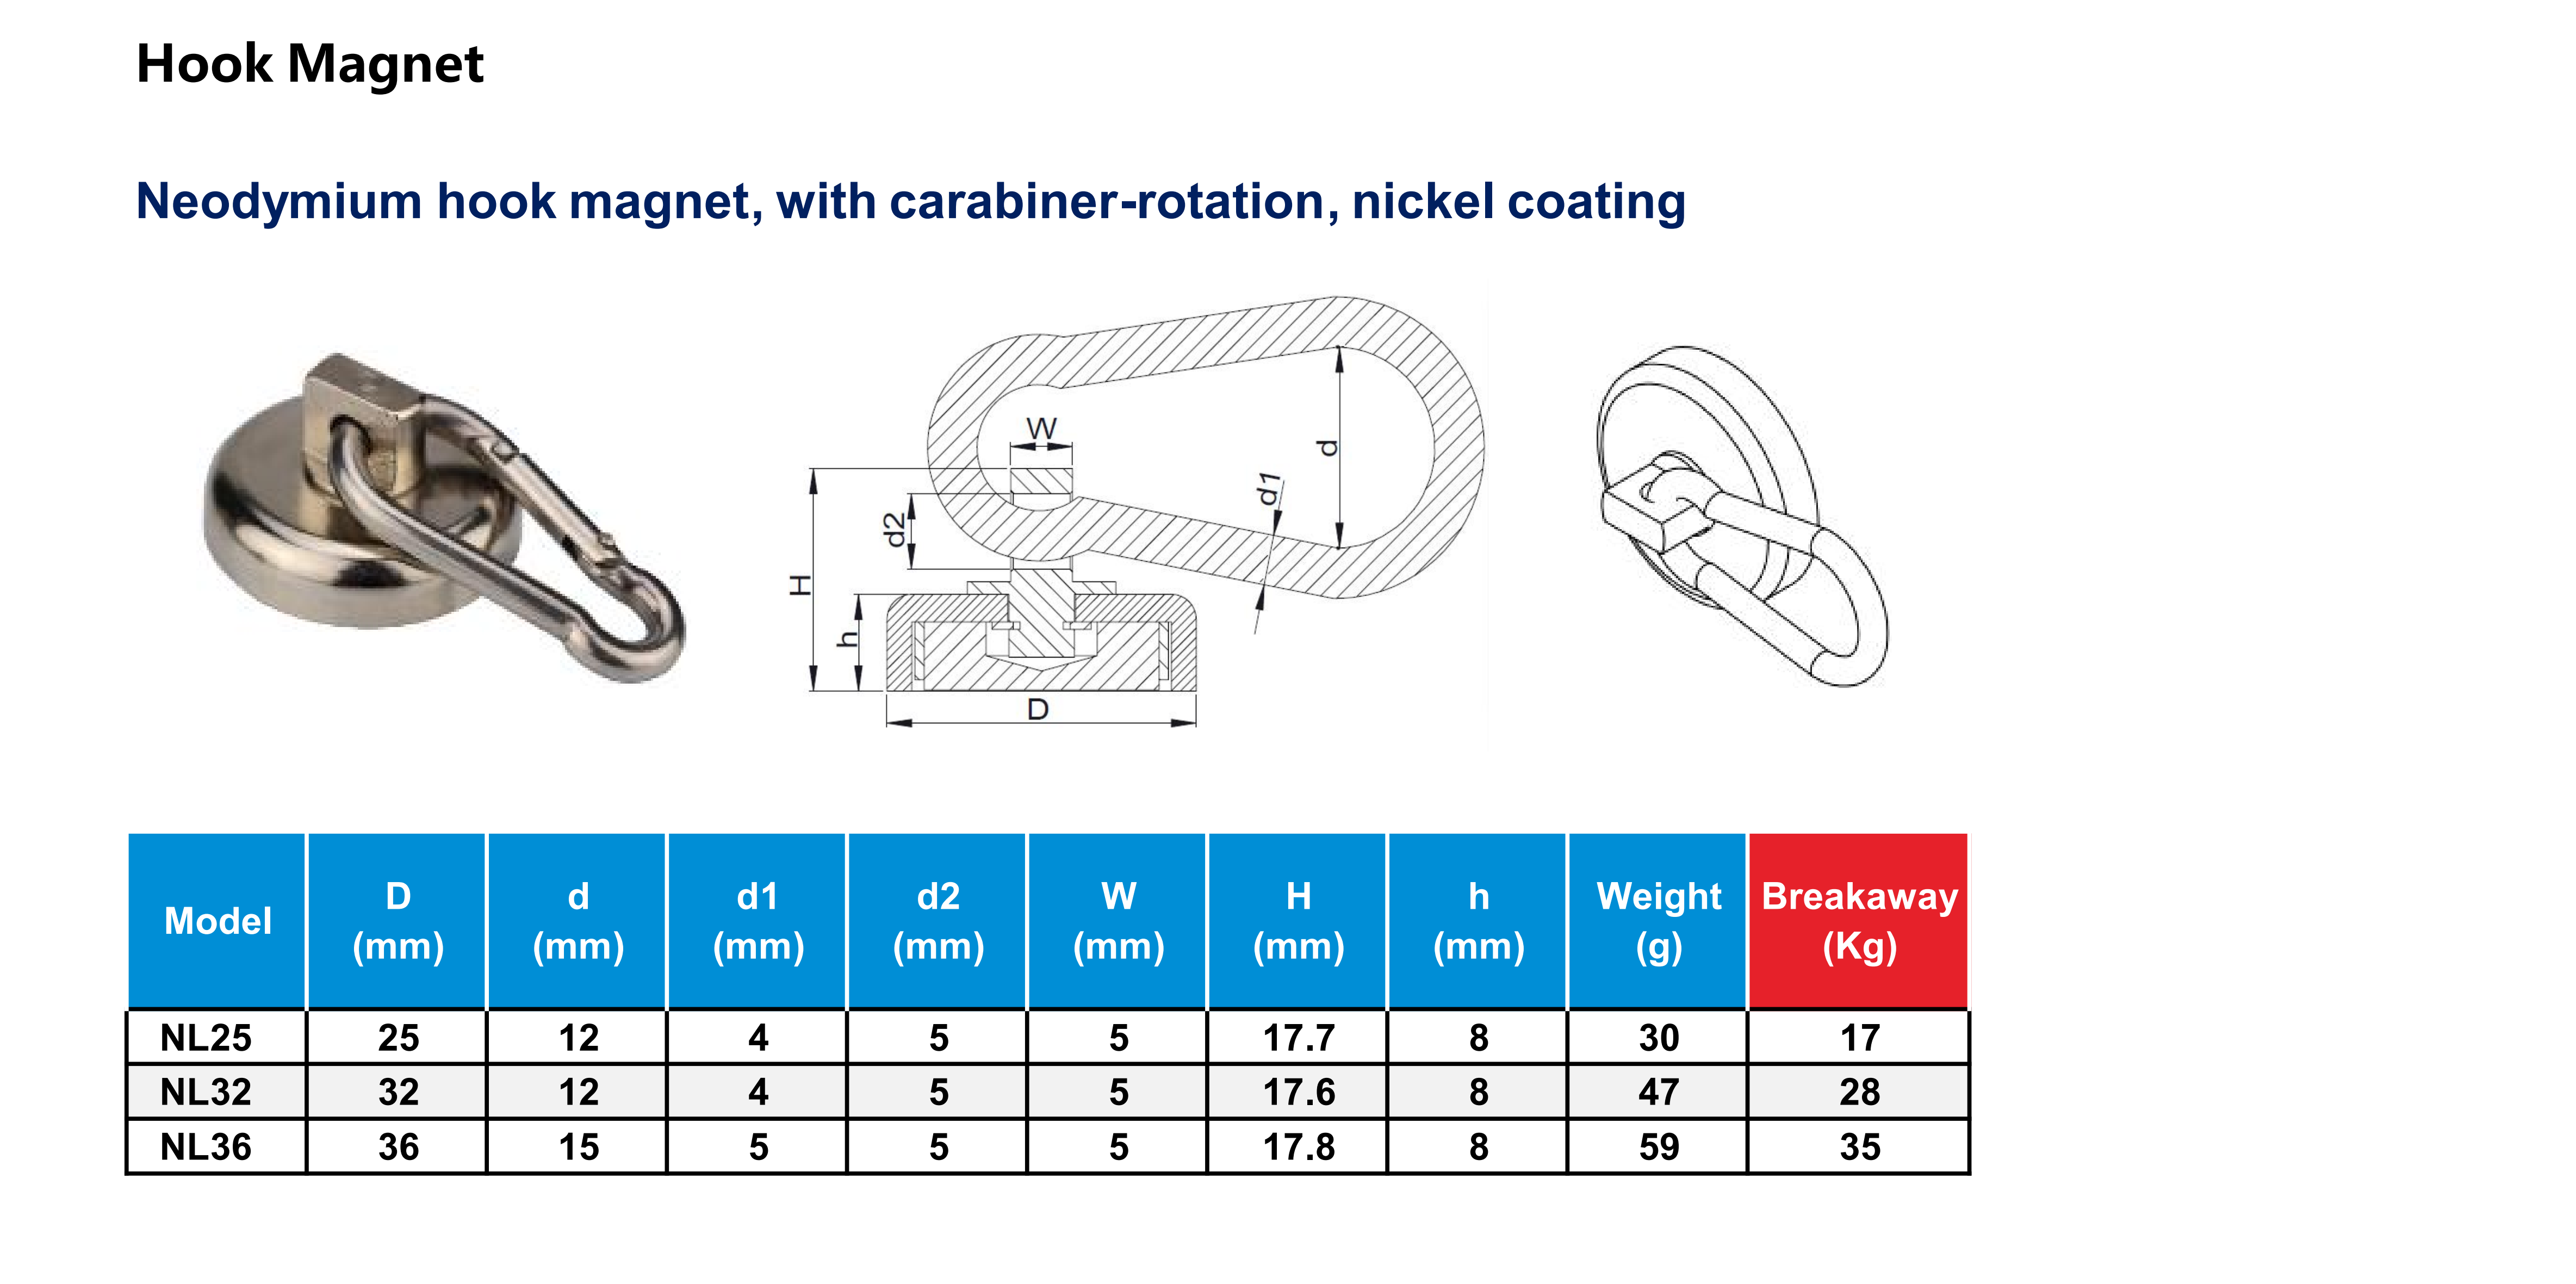 Carabiner-rotation Neodymium hook magnetNL